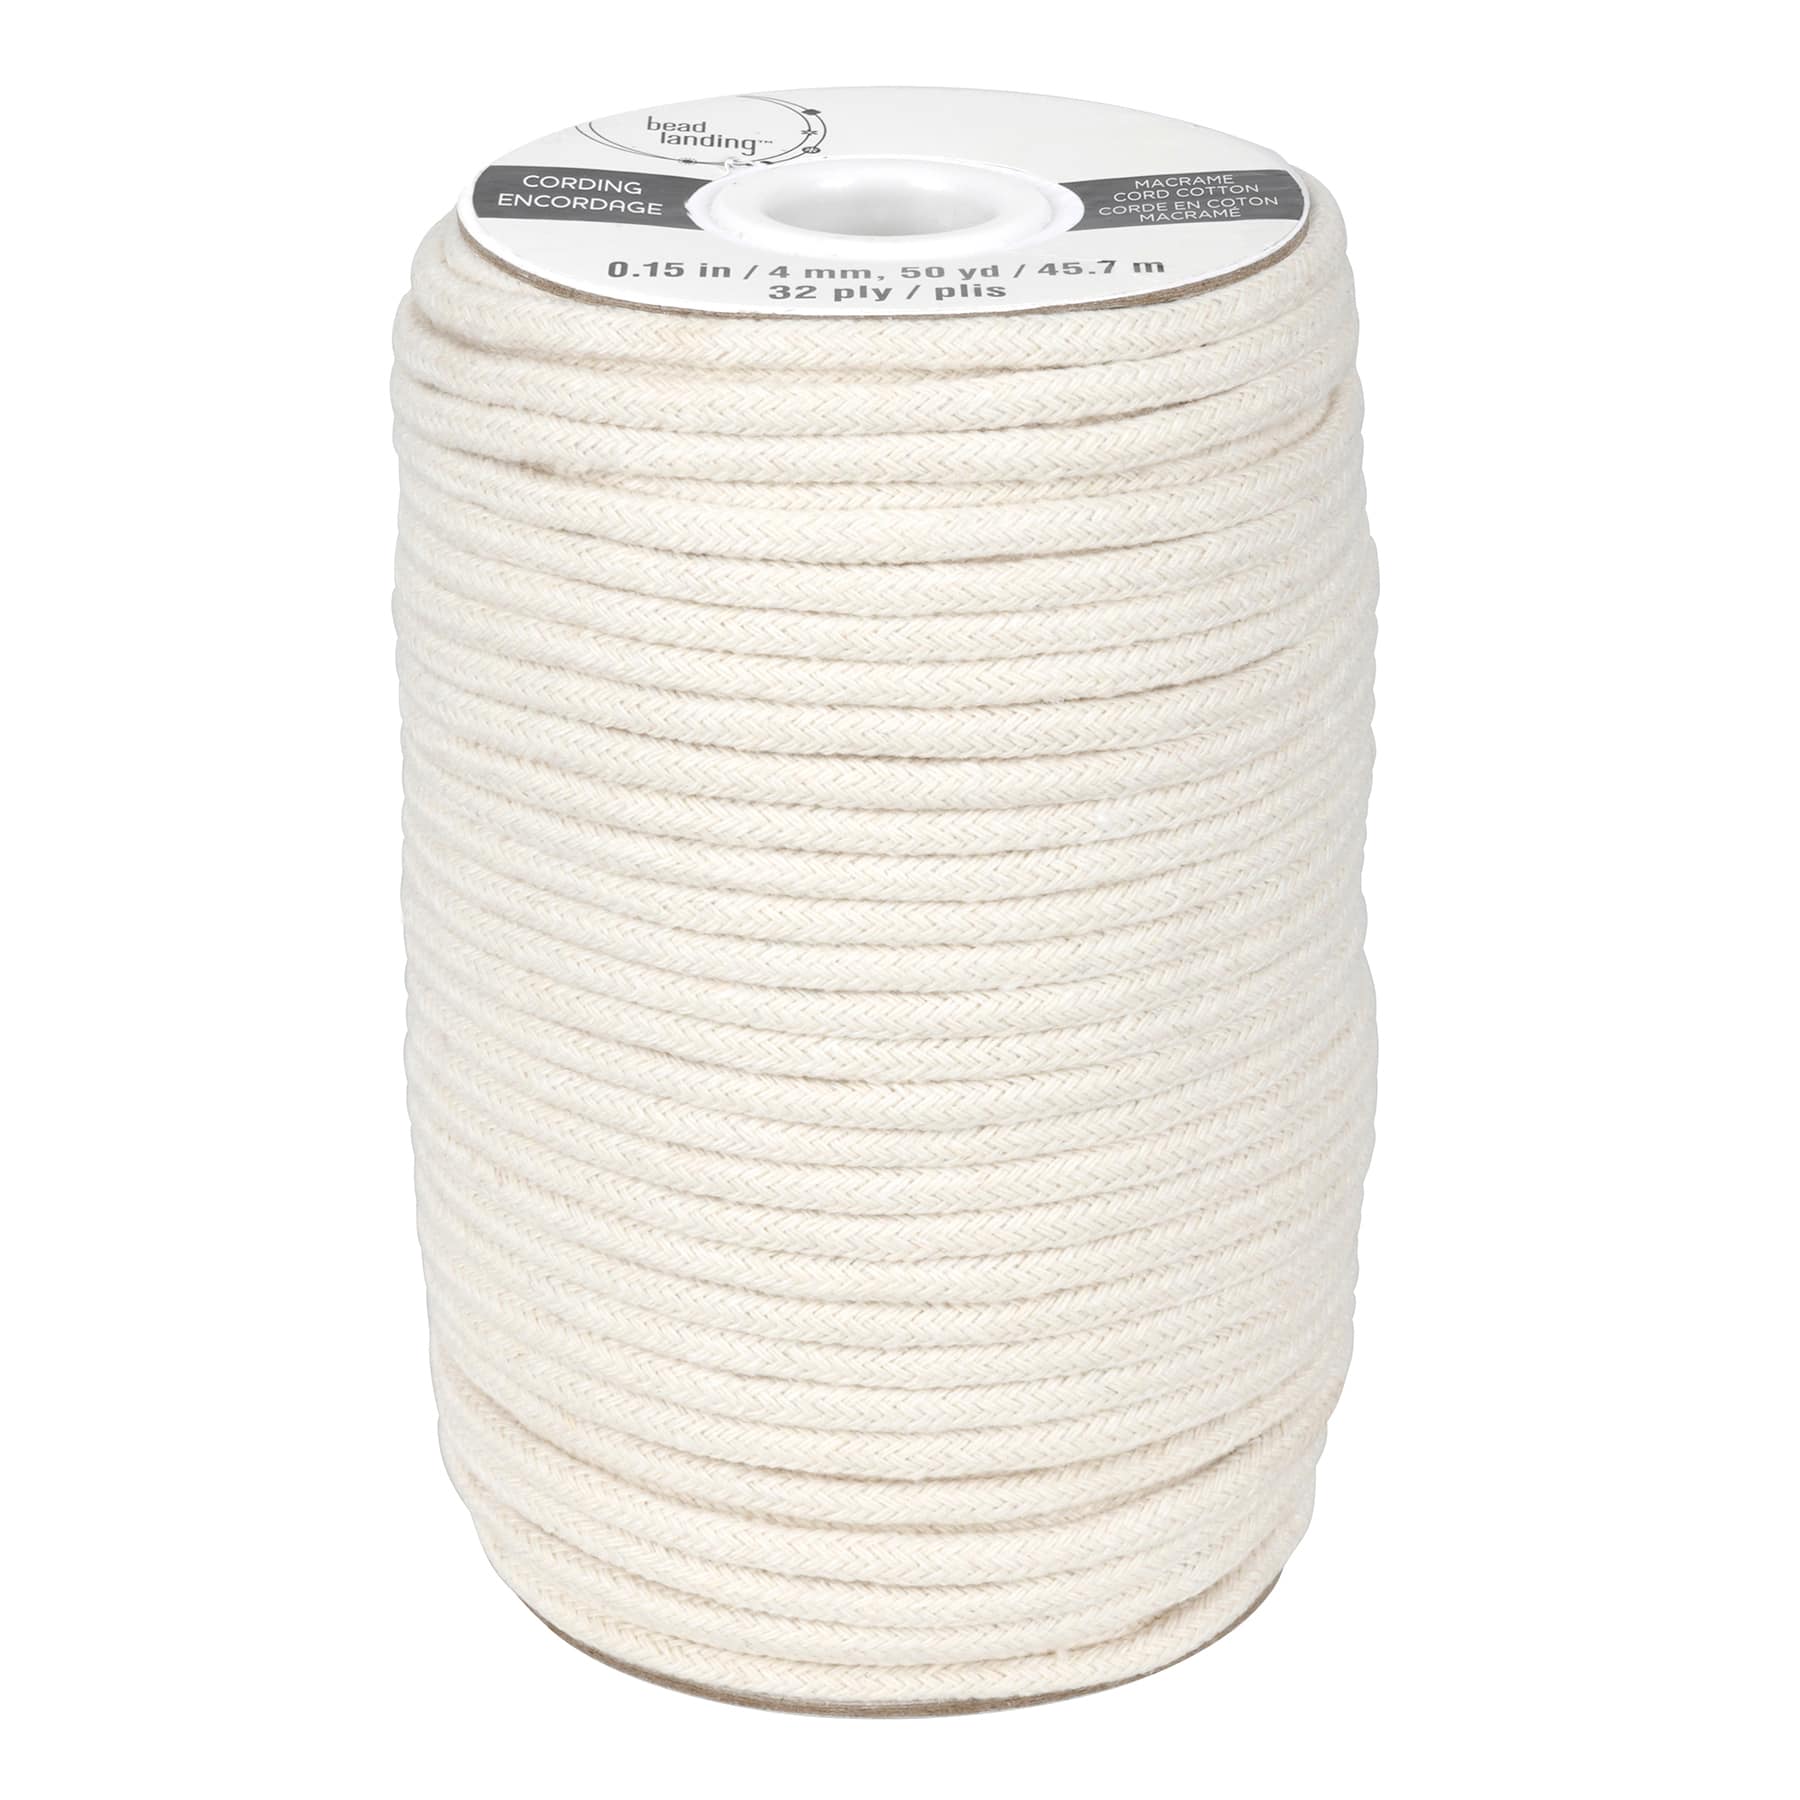 Buy in Bulk - 8 Pack: 4mm Natural Cotton Macramé Cord by Bead Landing™